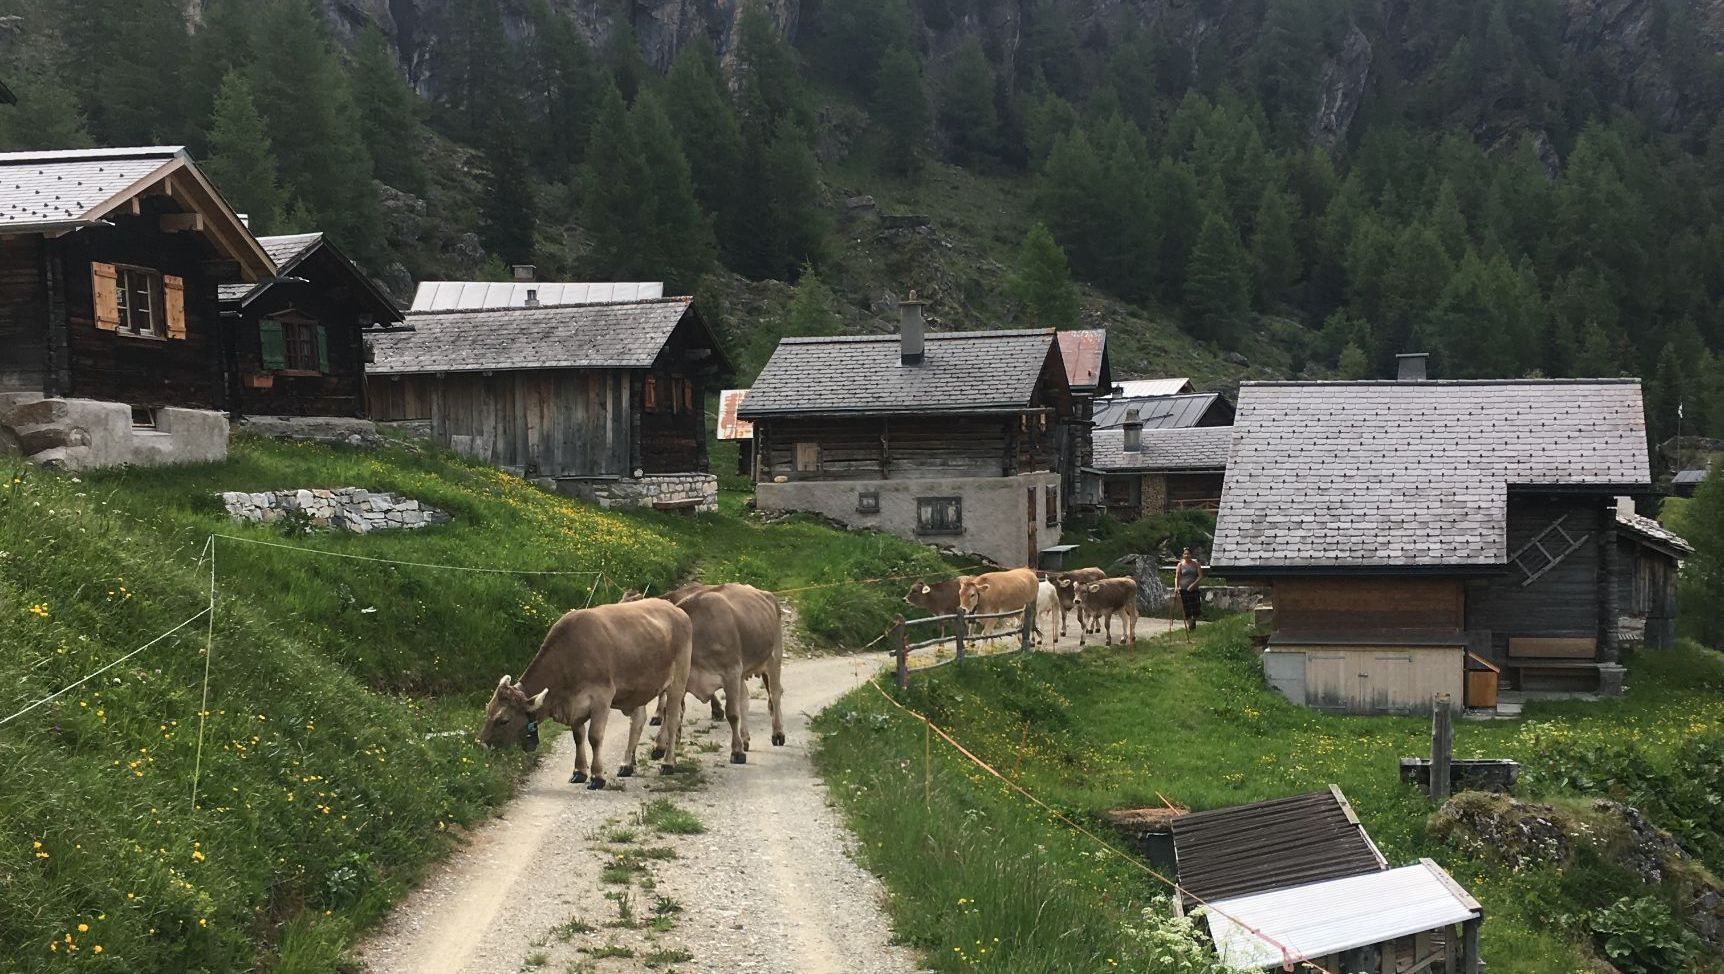 Schweiz Natur Berge Hütte mieten übernachten